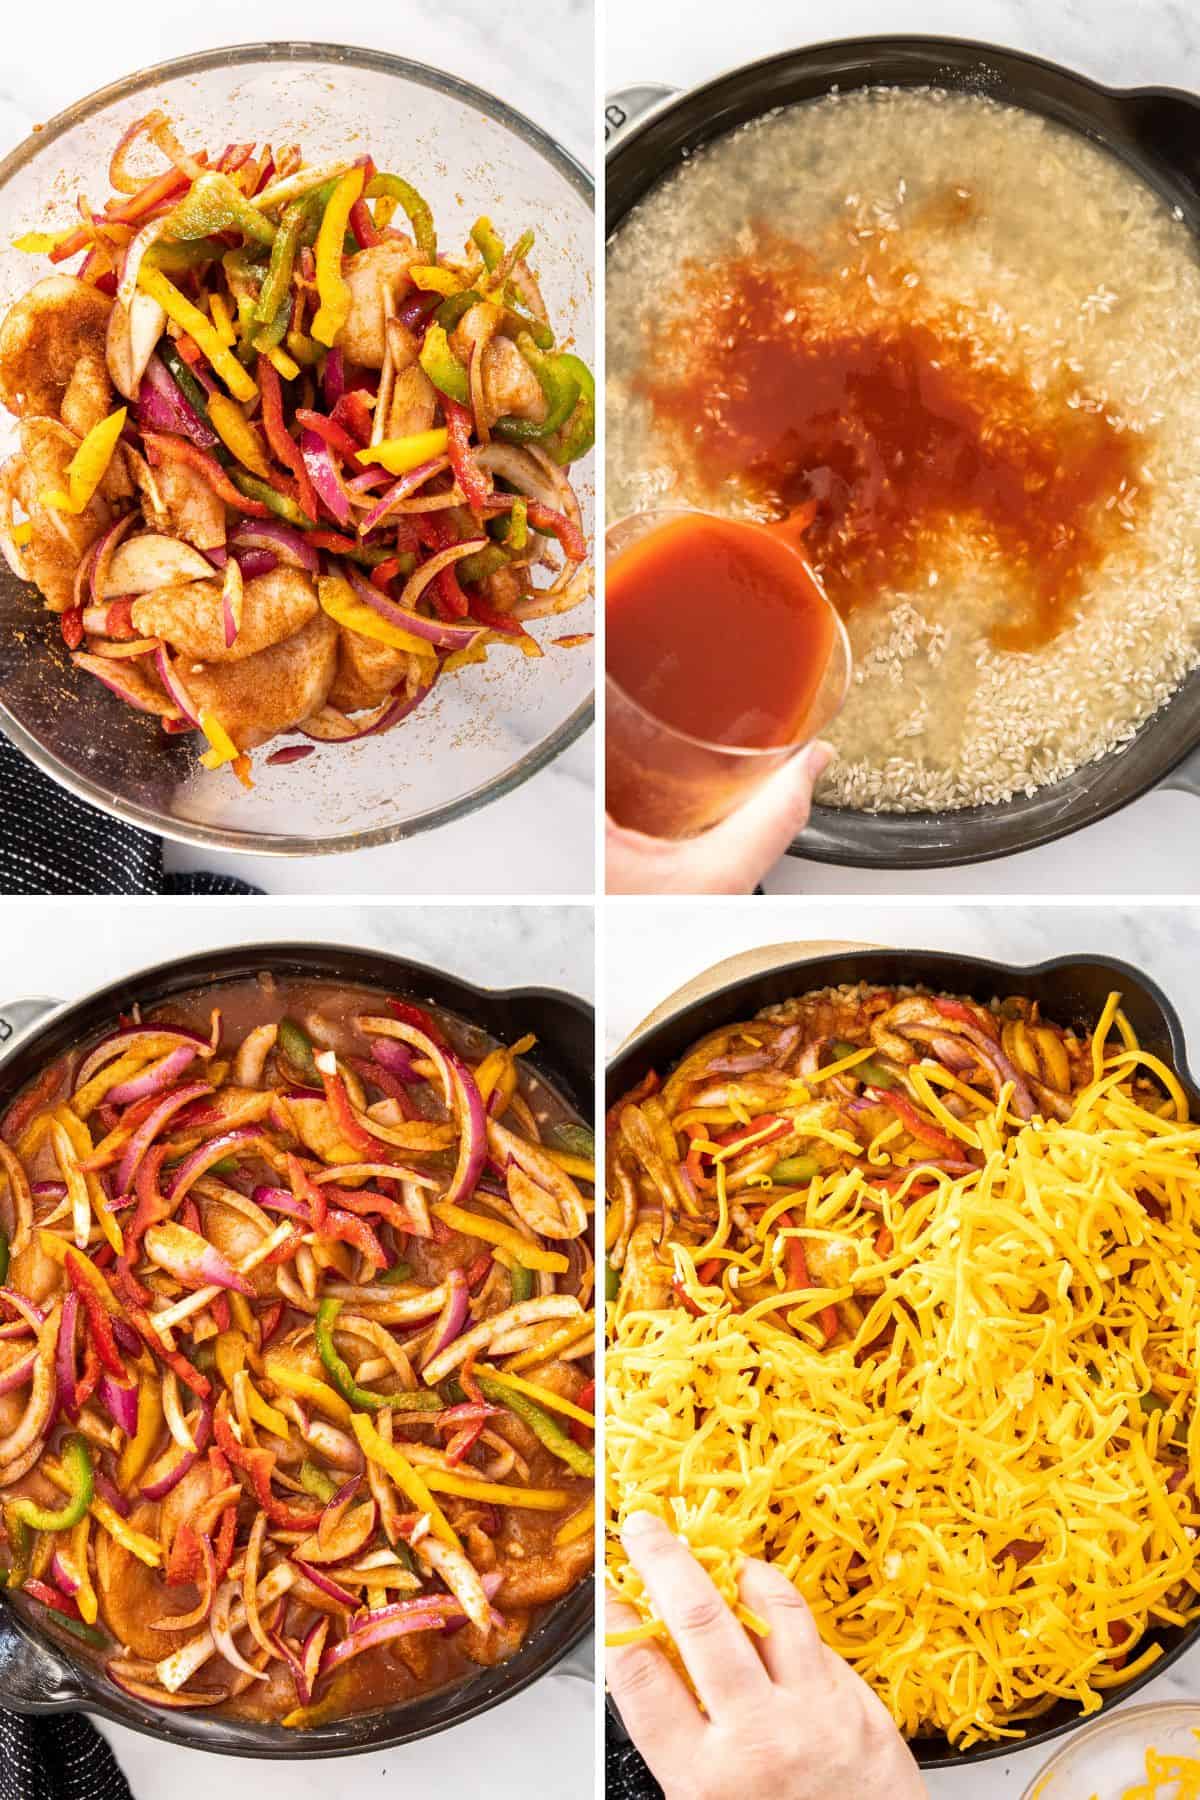 4 photos showing the process of making chicken fajitas casserole.